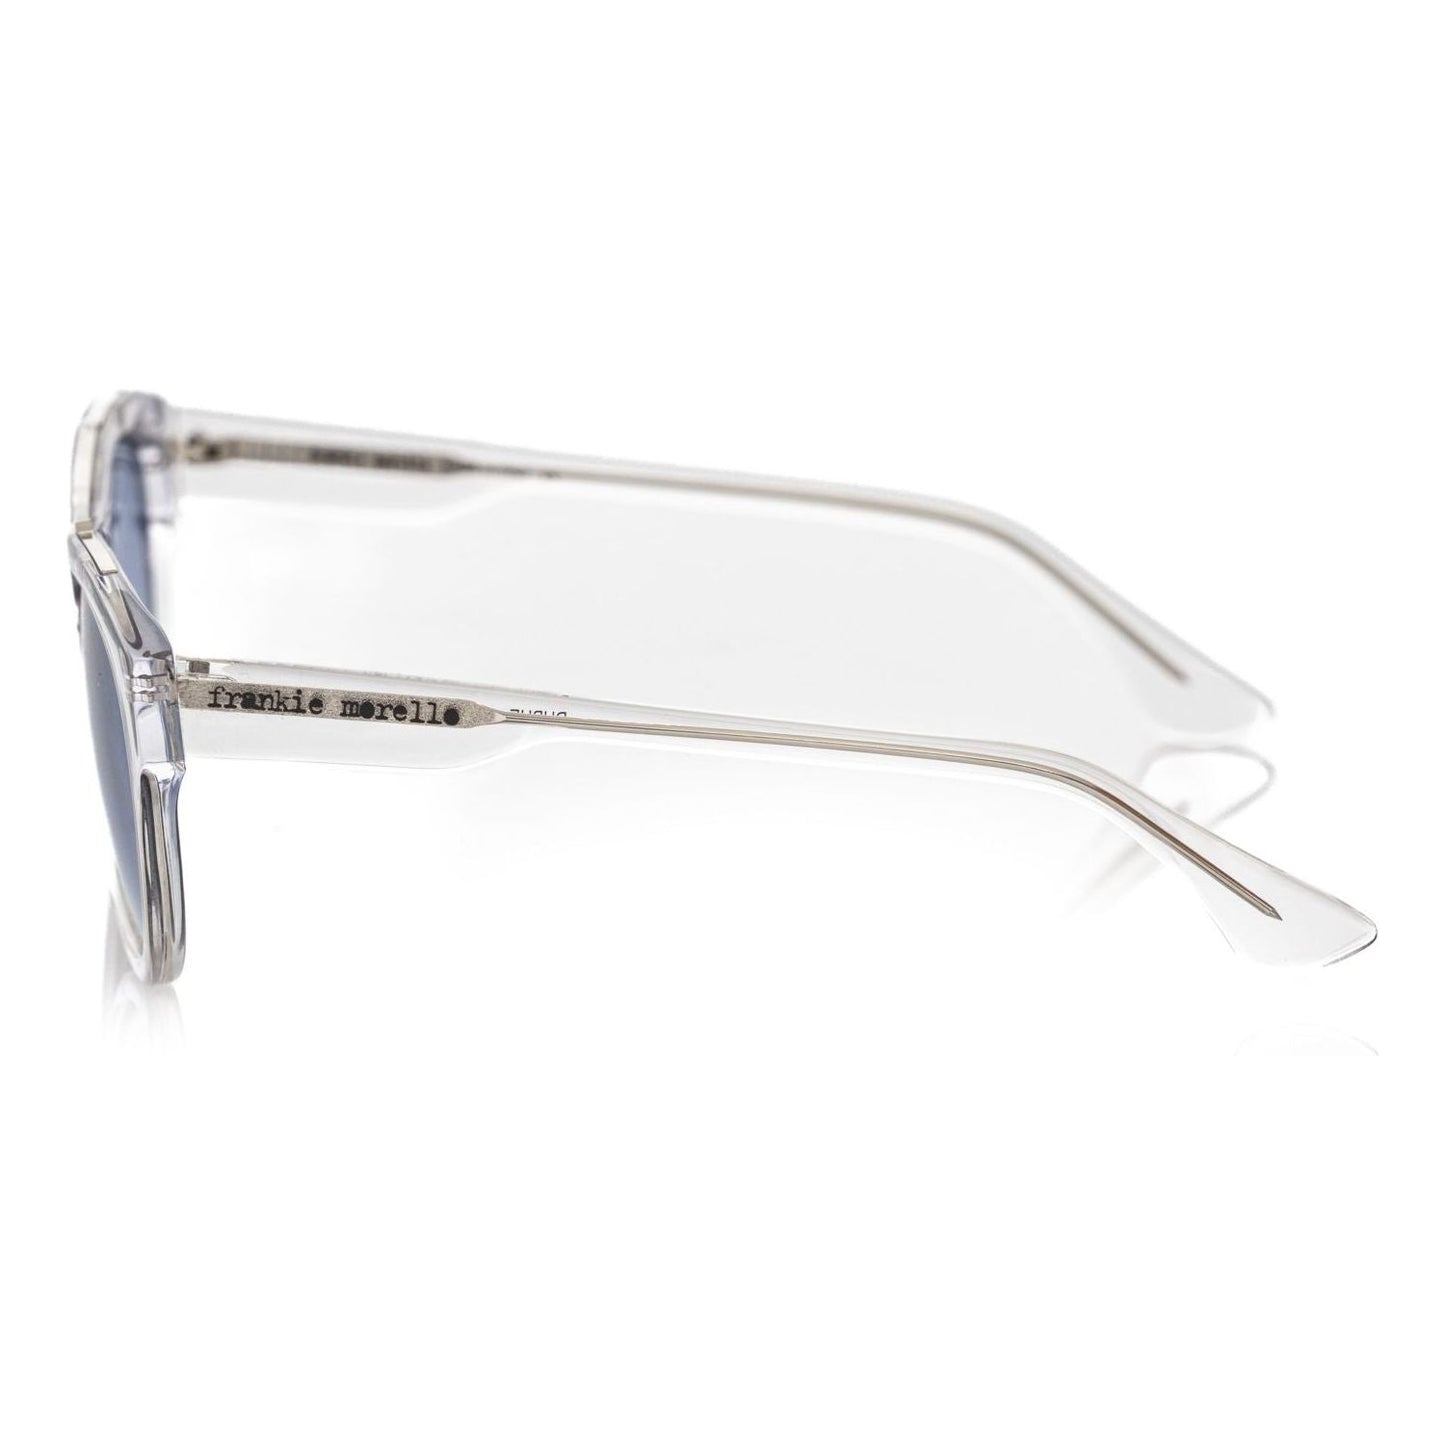 Frankie Morello Chic Shaded Blue Lens Wayfarer Sunglasses white-acetate-sunglasses product-22130-1467051616-scaled-a34f1d80-219.jpg